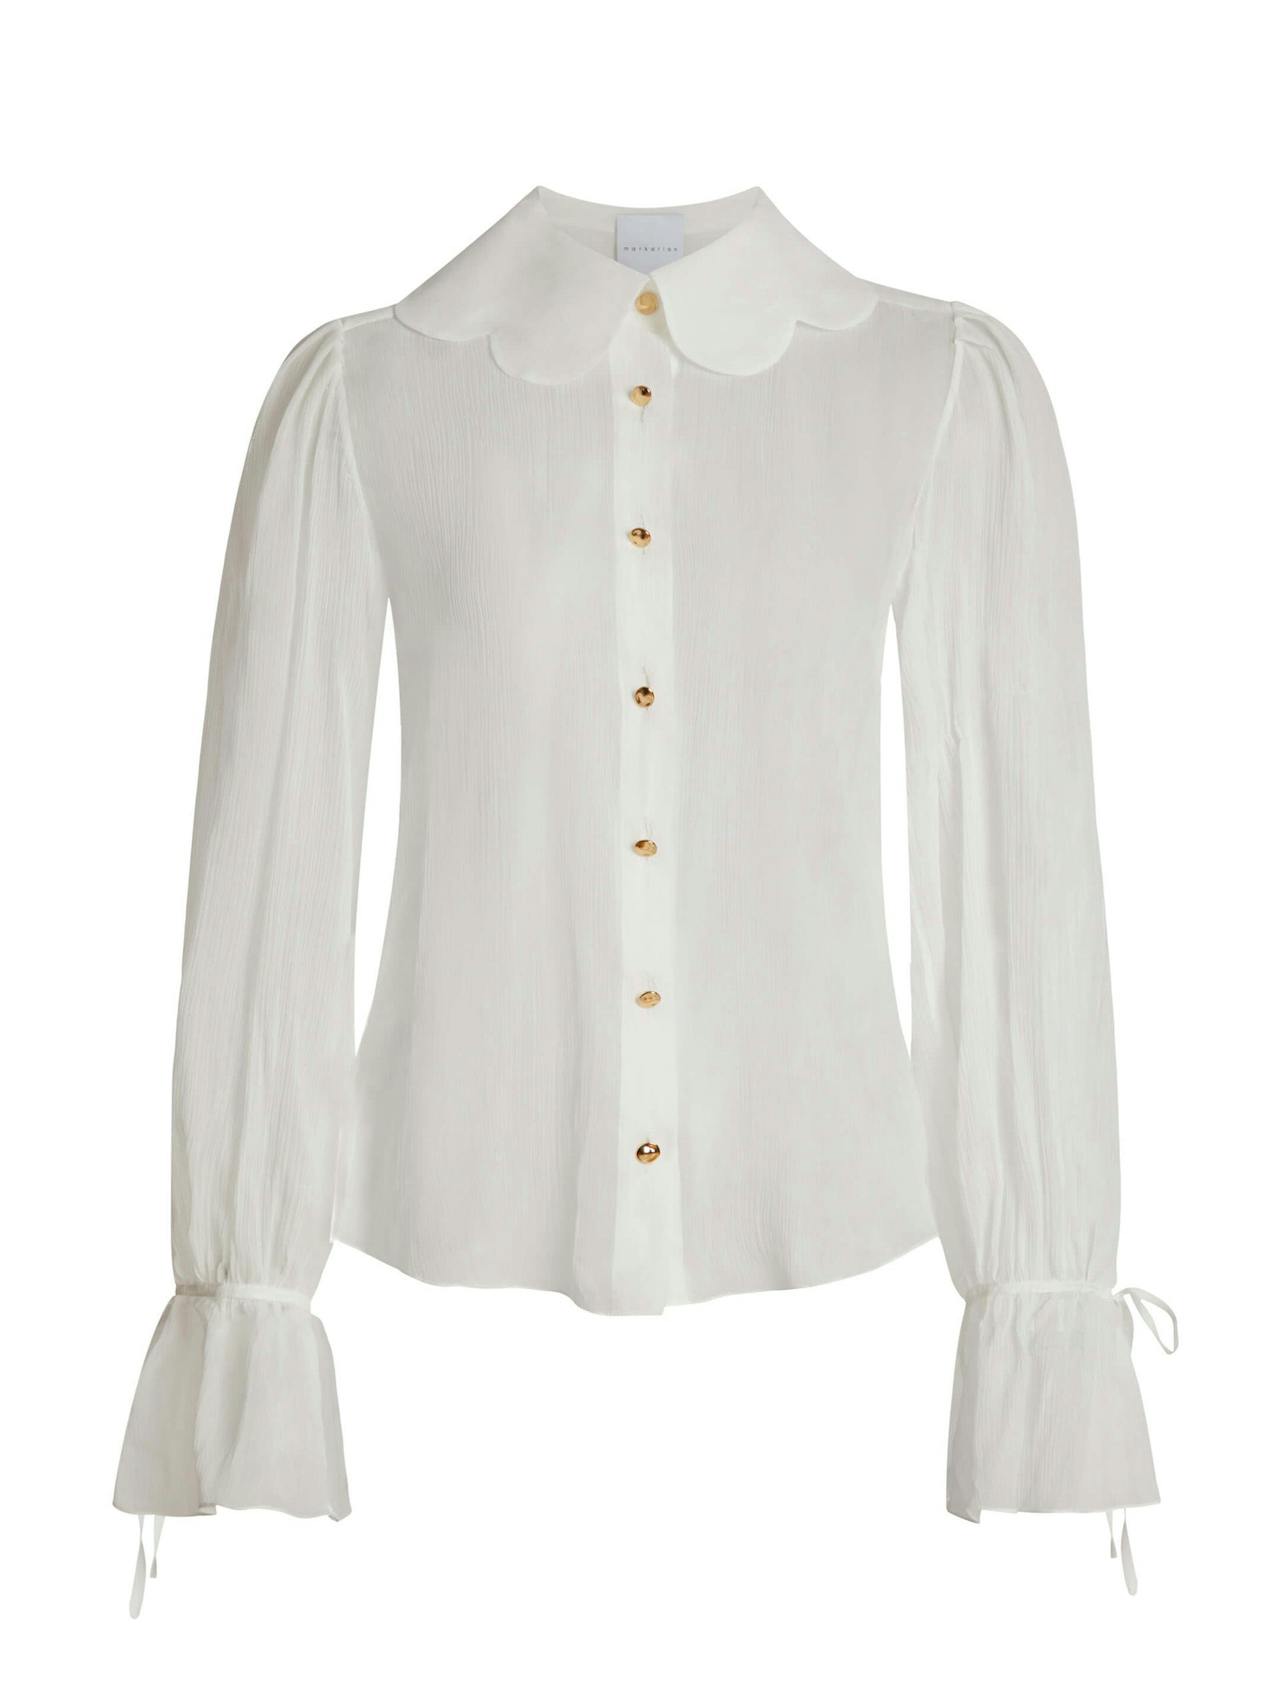 Amara off-white button down blouse